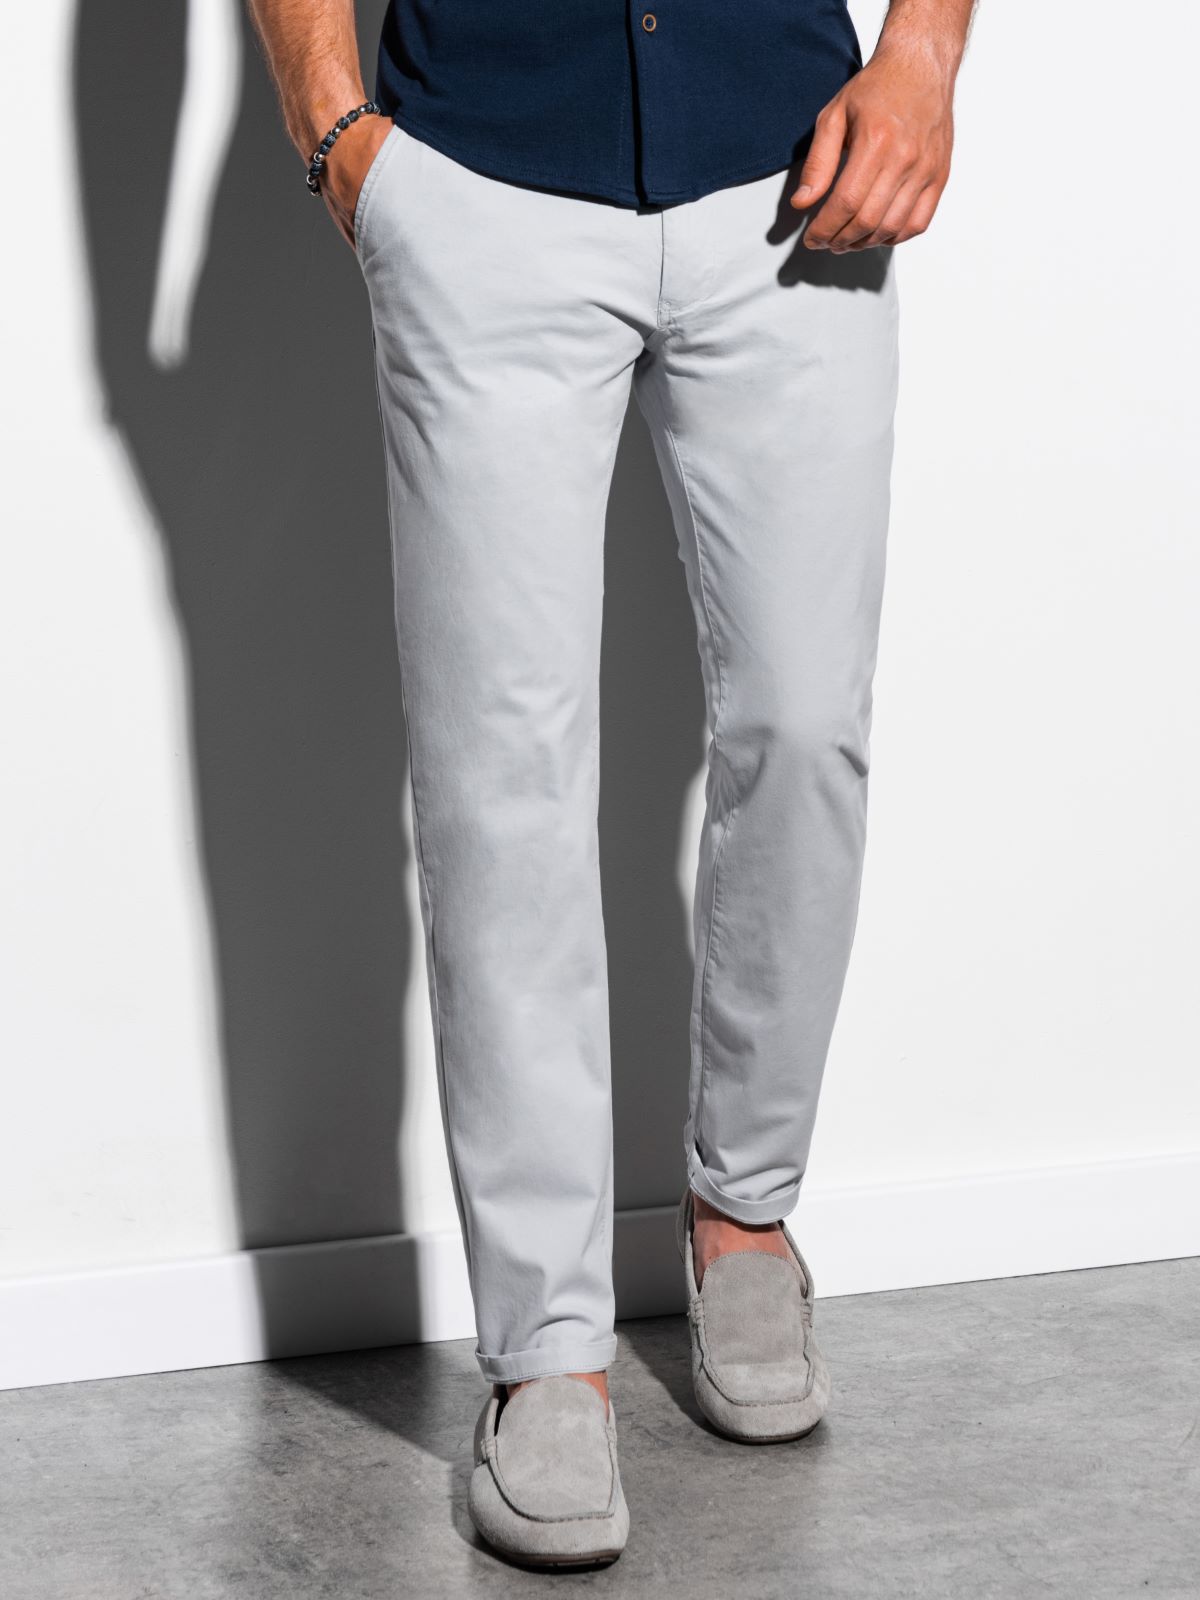 Men's pants chinos P894 - light grey 